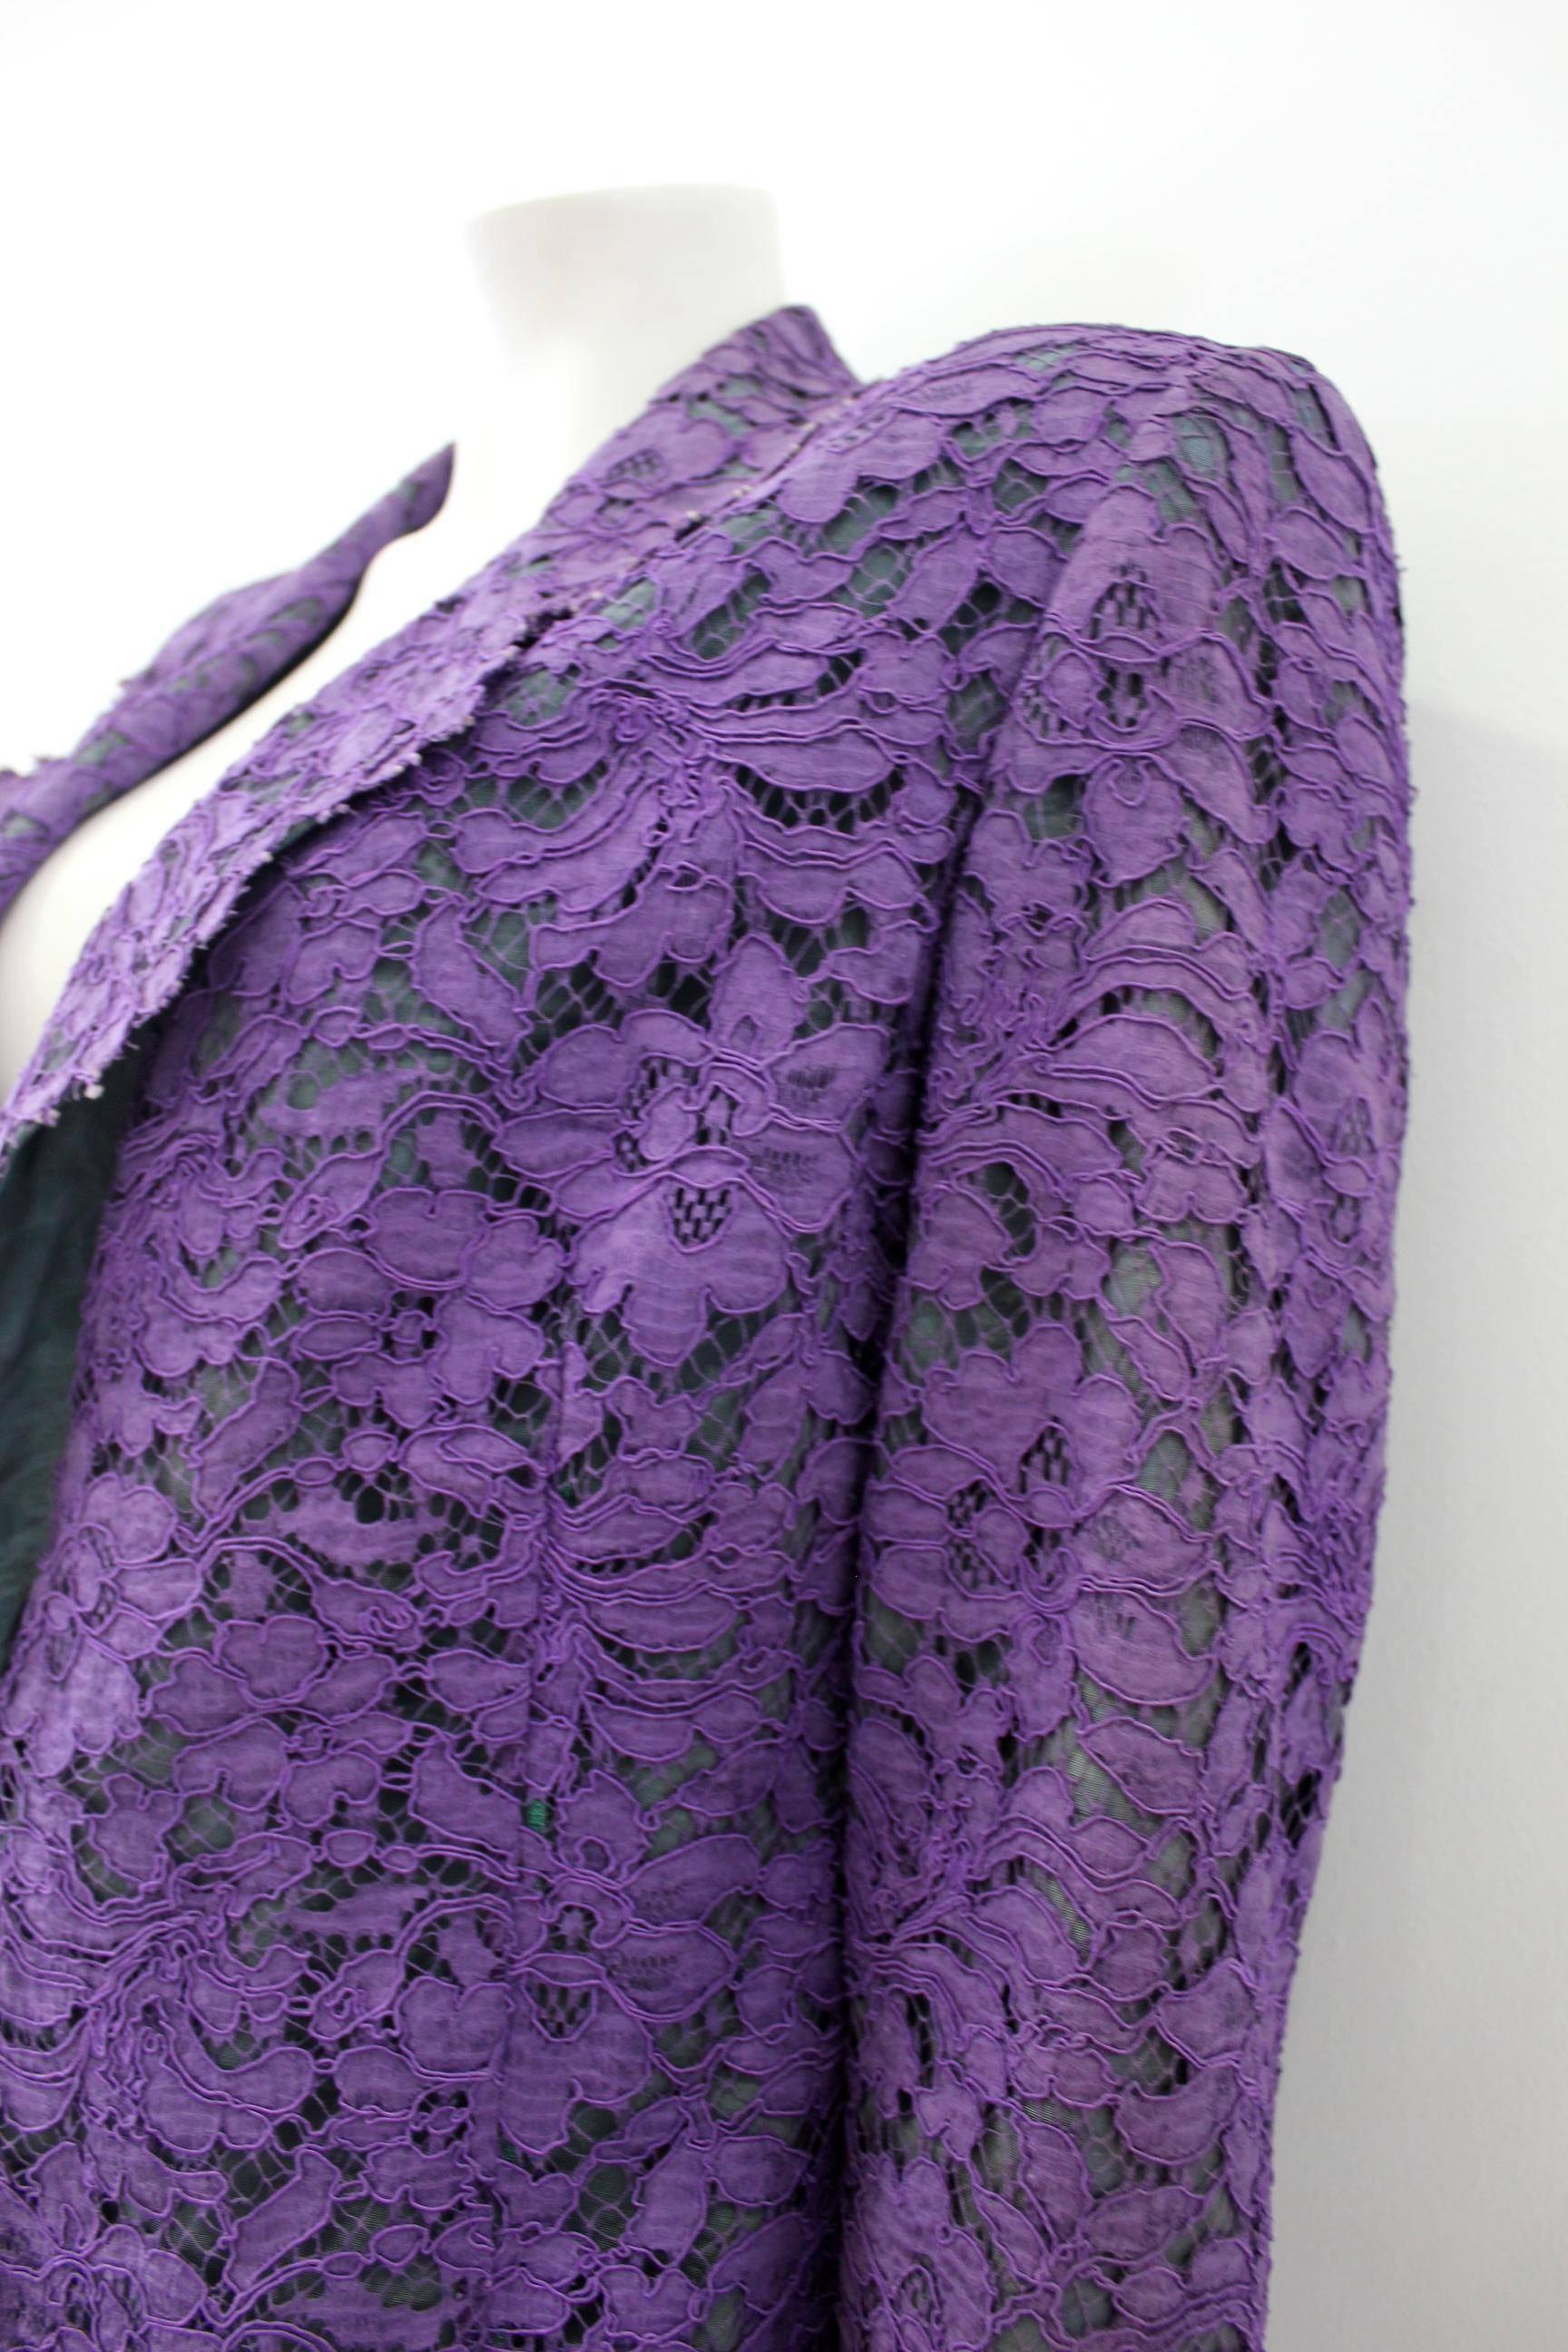 Exquisite Gianfranco Ferre Royal Purple Lace Jacket For Sale 1